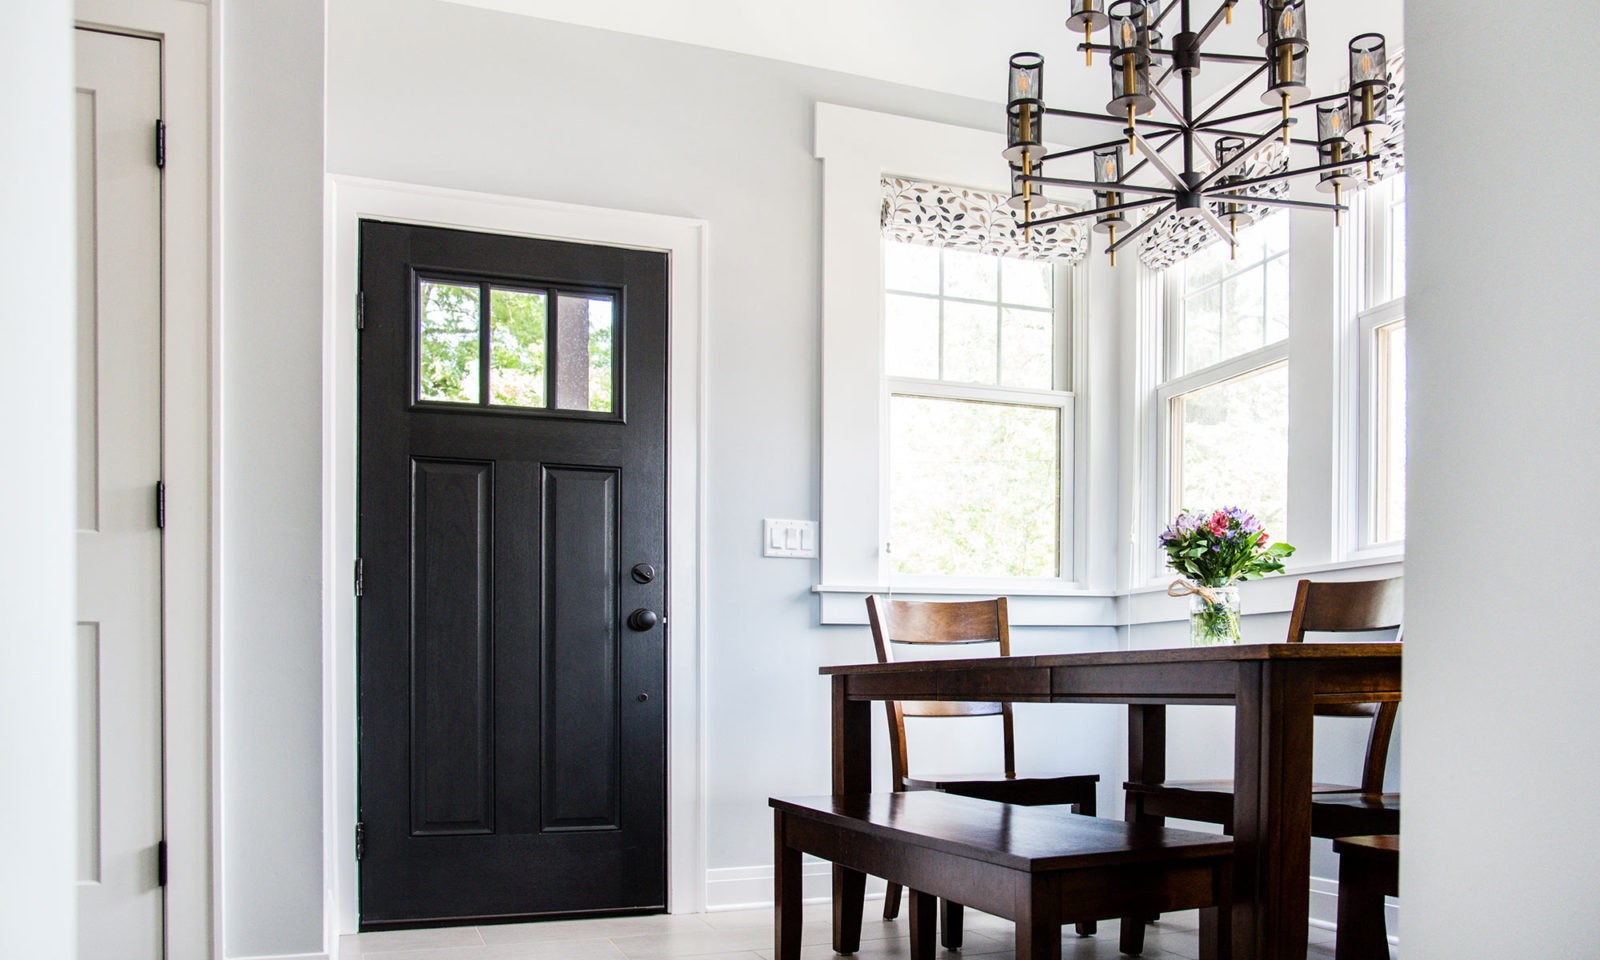 Newly renovated kitchen with dark statement kitchen door, modern chandelier, dark table, and light color walls